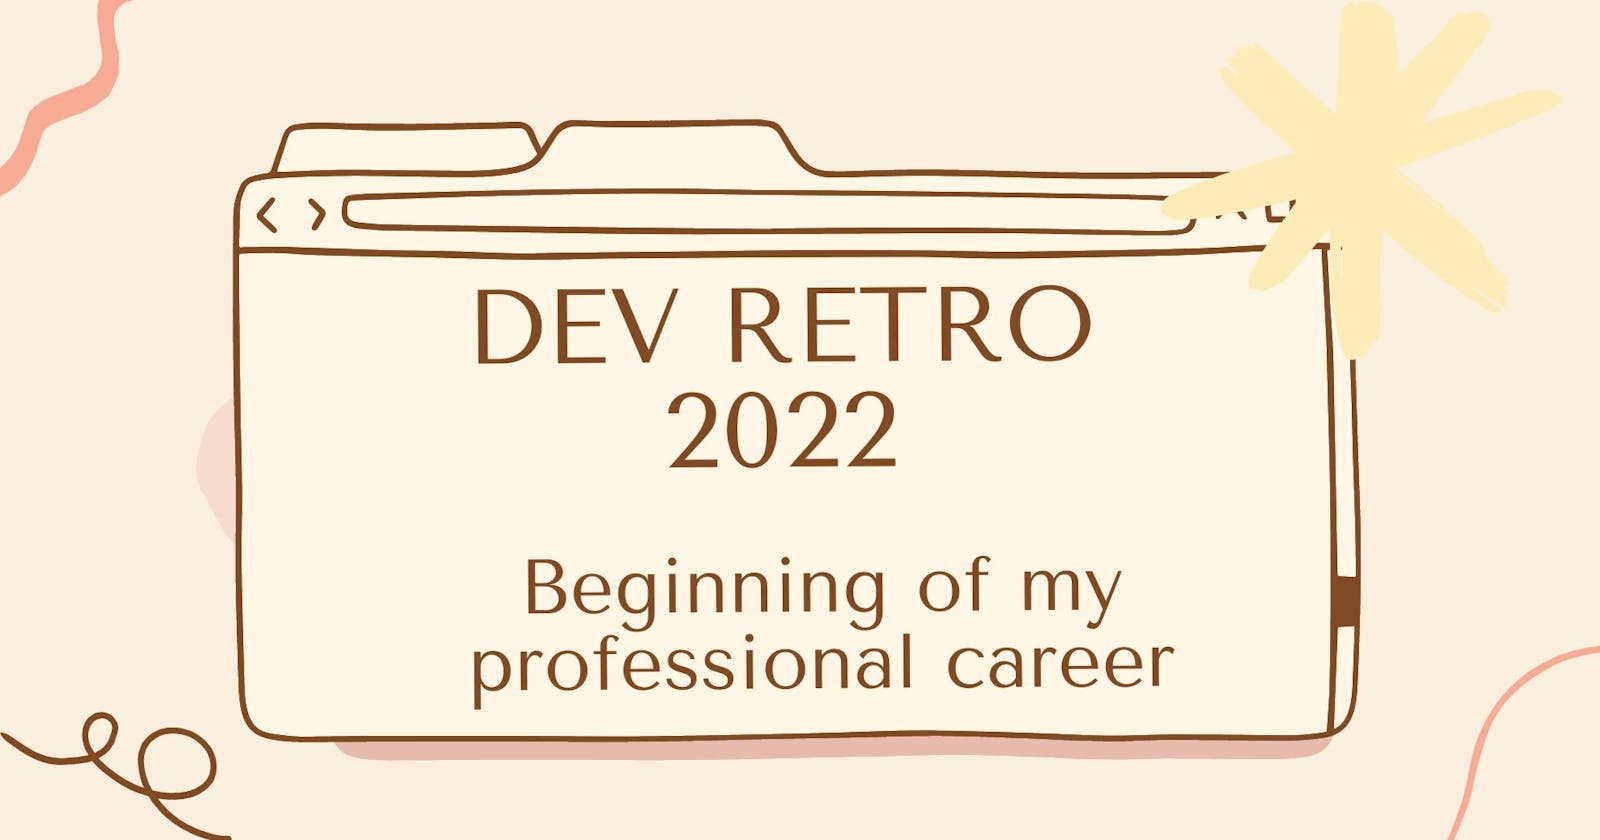 Dev Retro 2022 - Beginning of my professional career